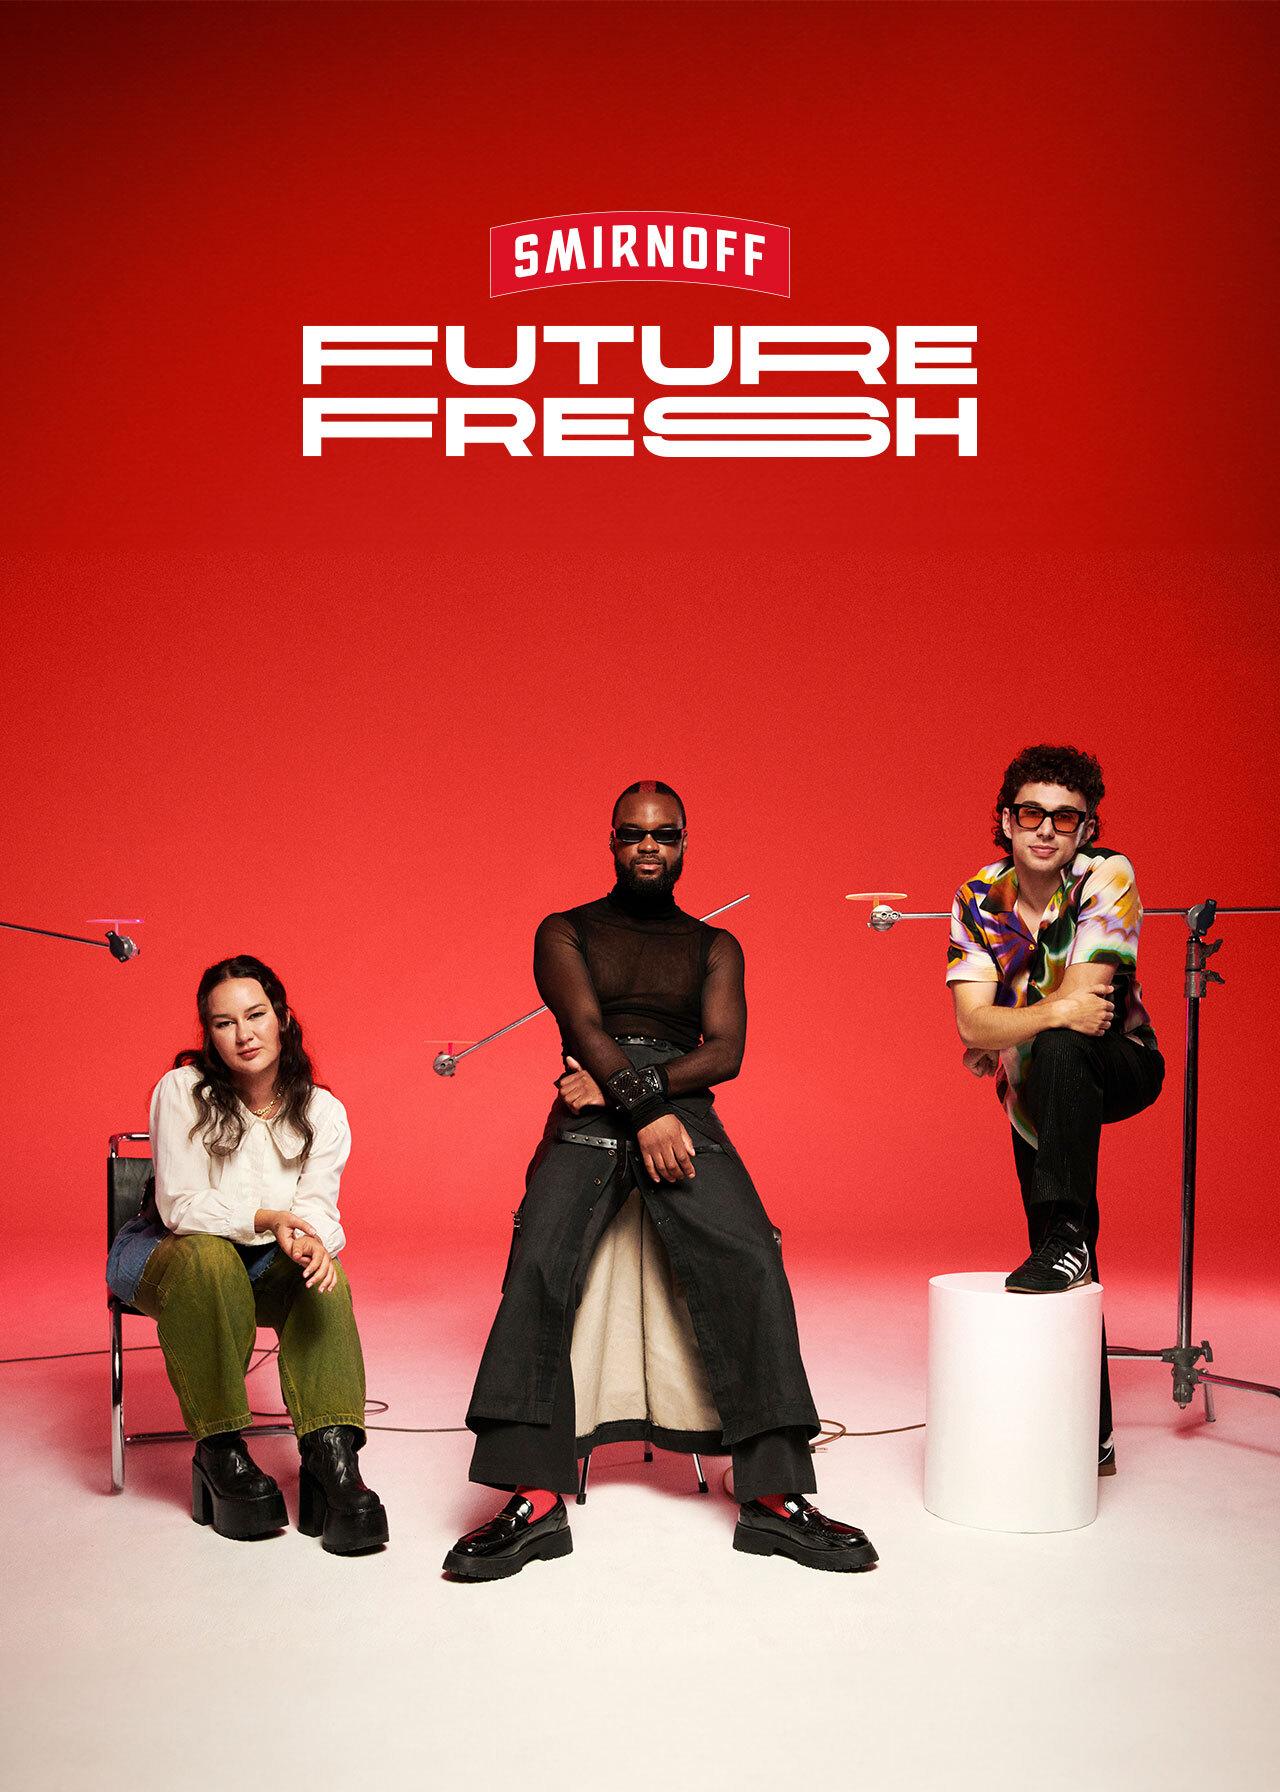 Genesis Owusu, Mallrat, and Young Franco with caption 'Smirnoff Future Fresh'